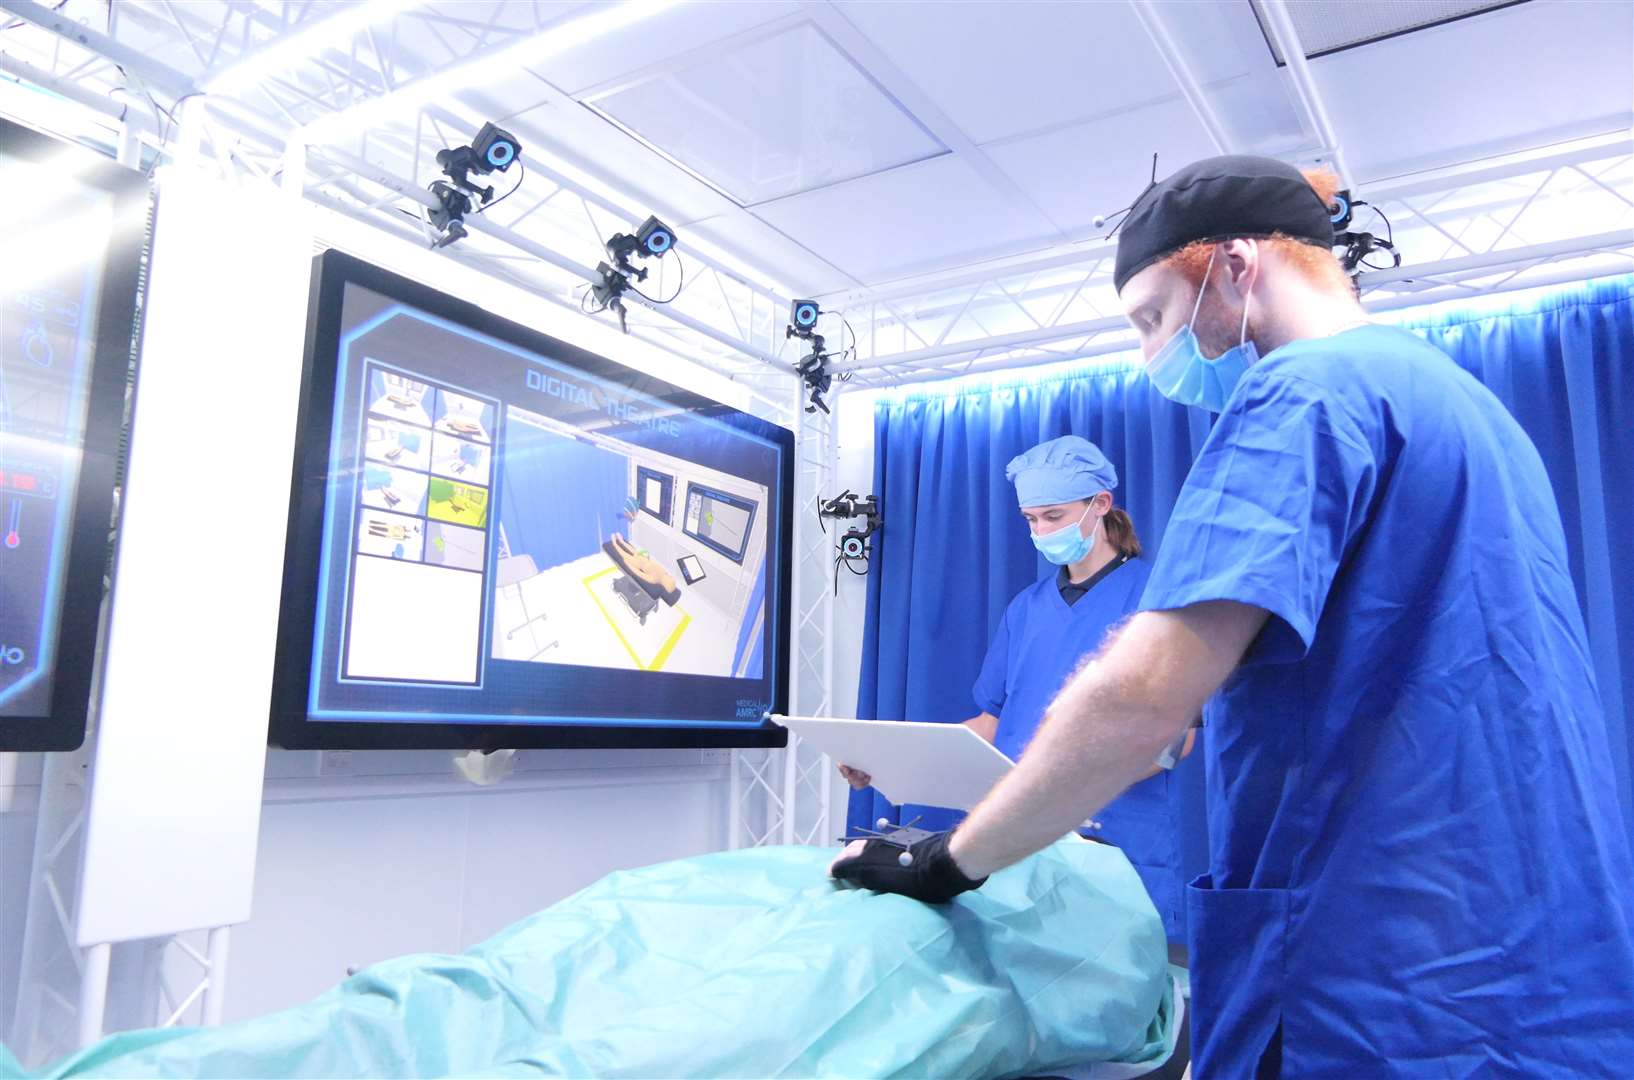 Tonbridge-based company i3D robotics wins government funding to develop a surgical operation simulator